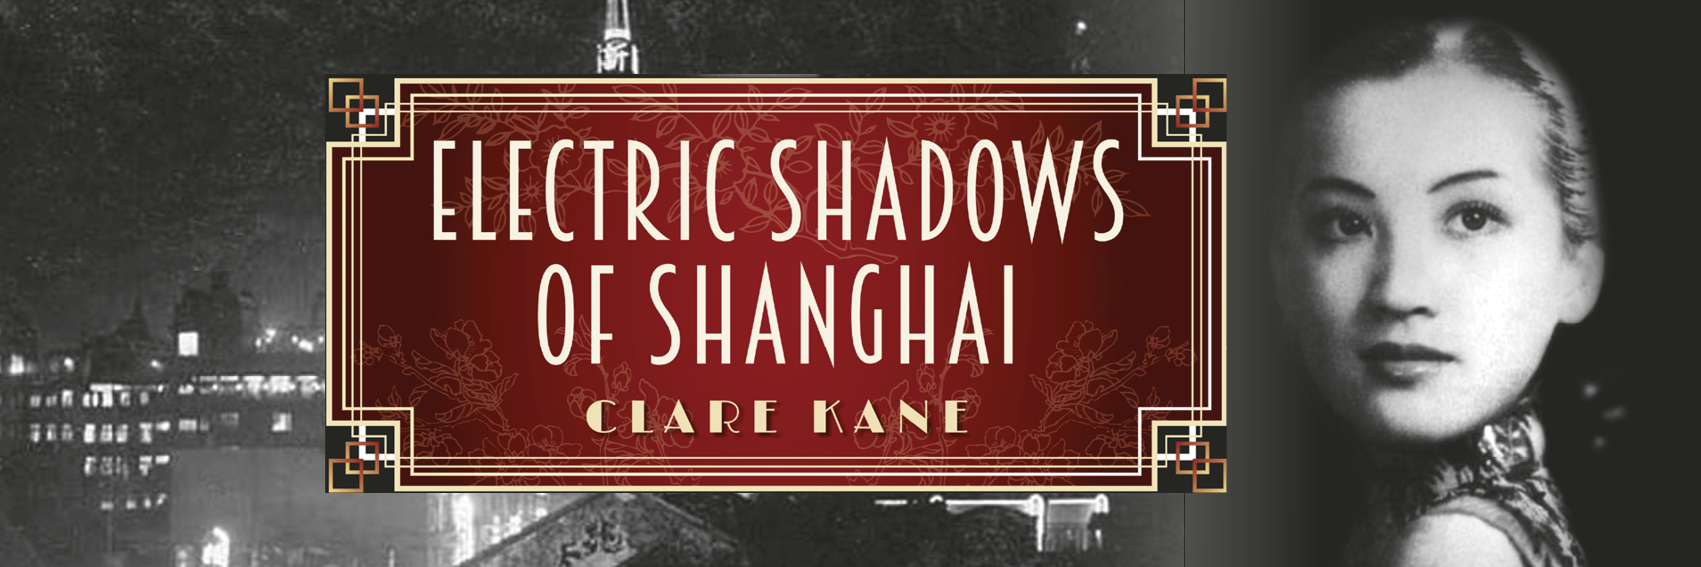 electric shadows banner